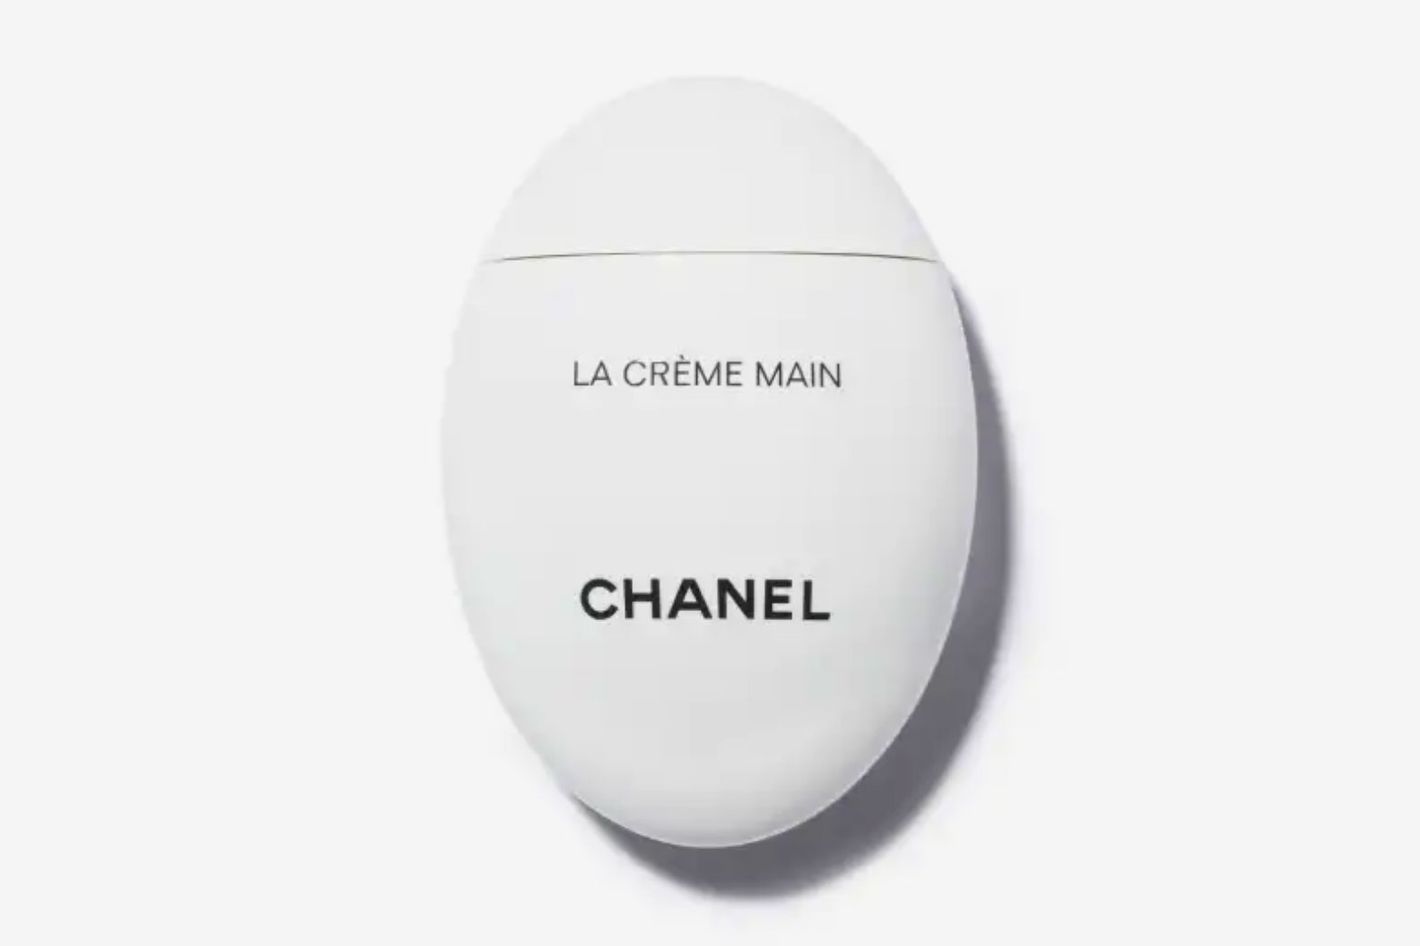 La crème main chanel hand cream is it worth it?!? #chanelreview